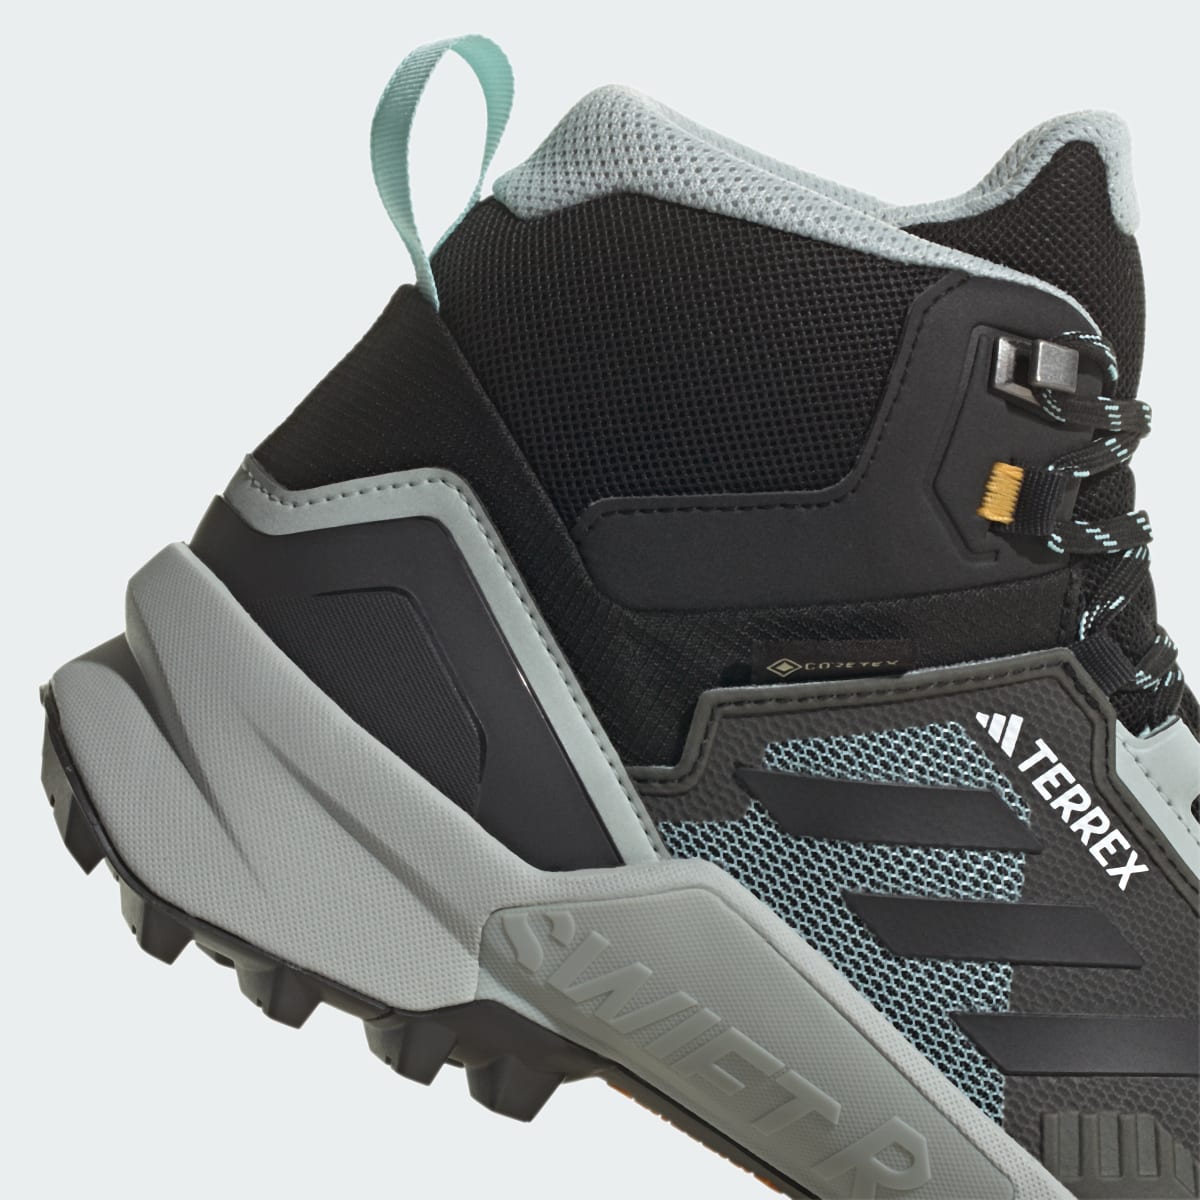 Adidas Zapatilla Terrex Swift R3 Mid GORE-TEX Hiking. 4